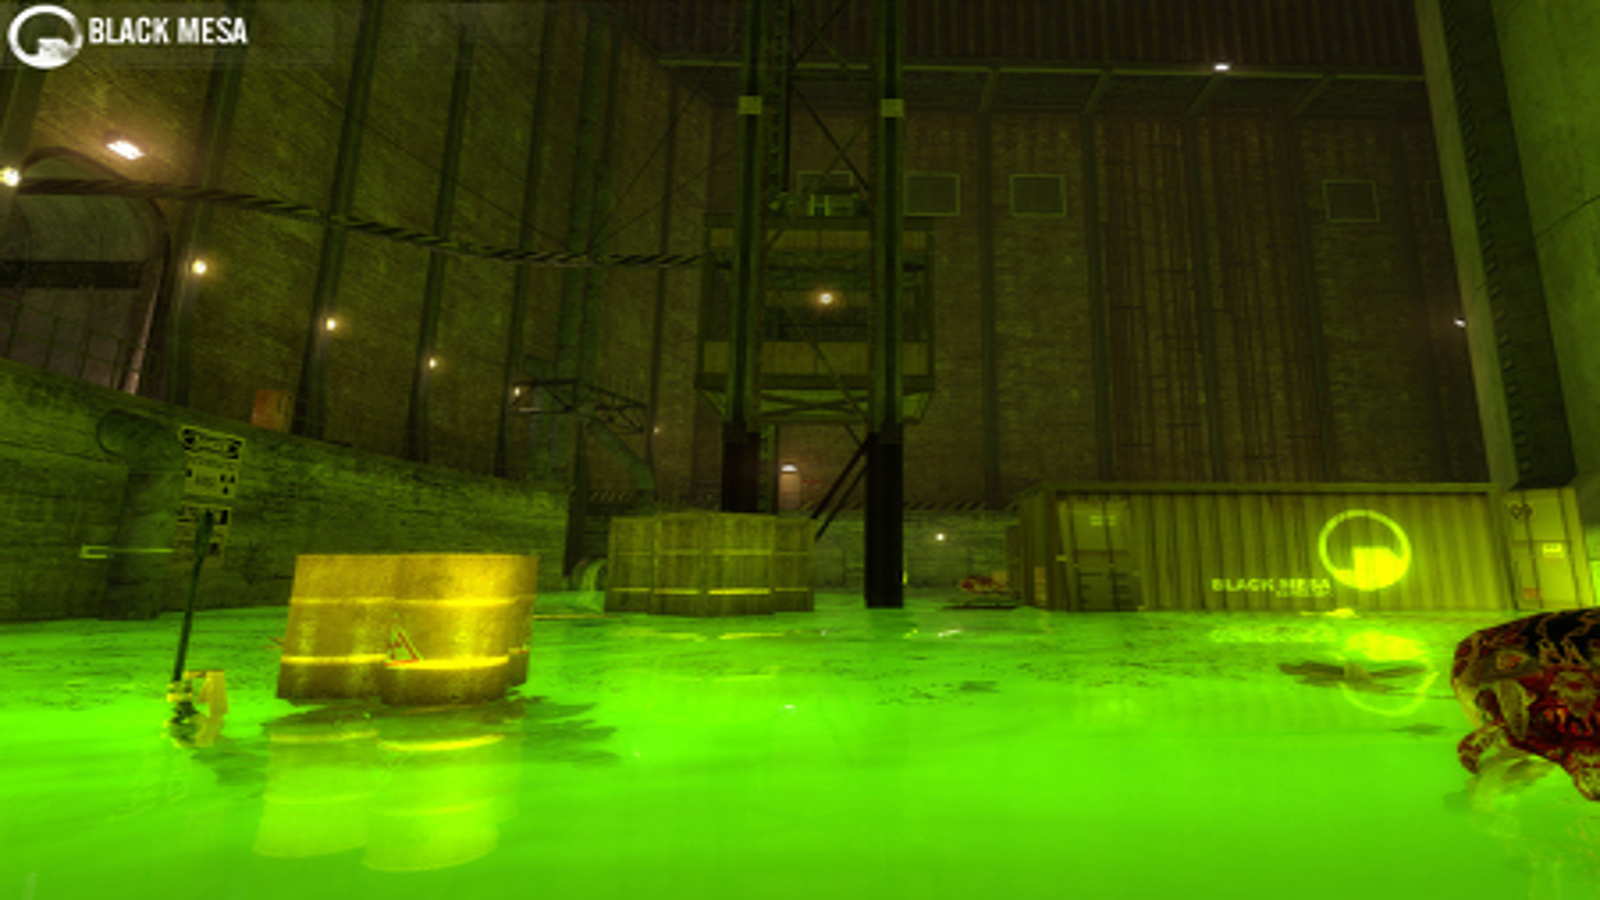 Half-Life' Black Mesa mod gameplay leaked - Polygon